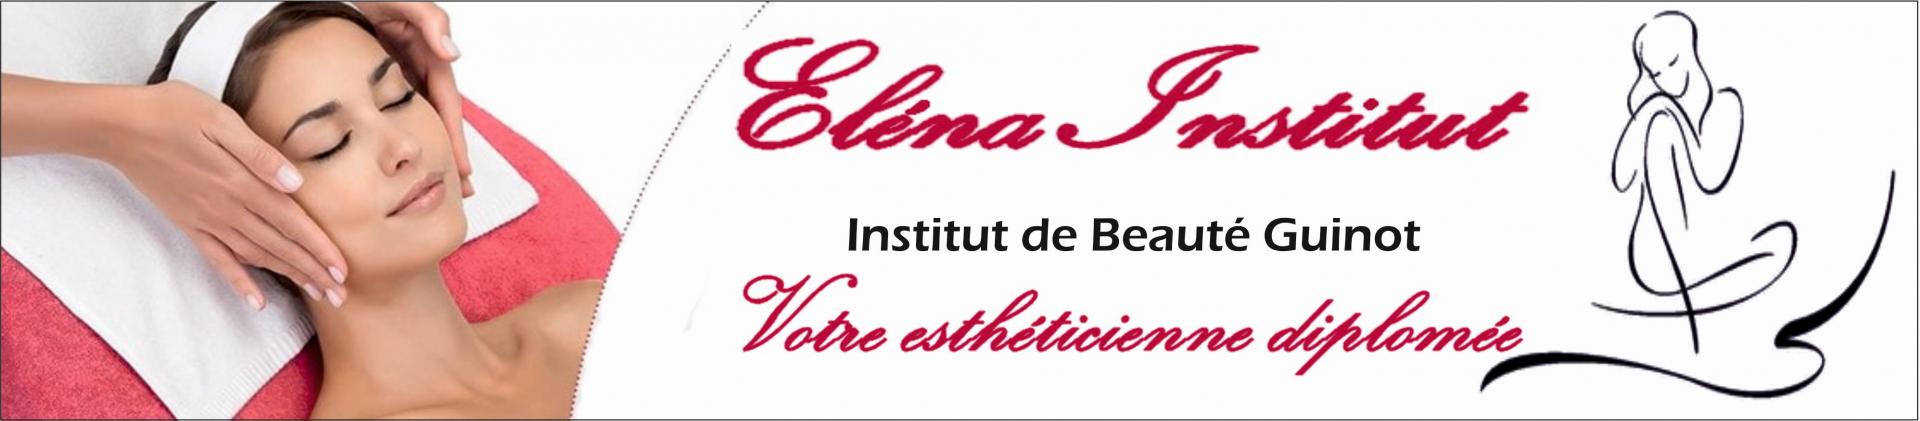 Institut de Beauté